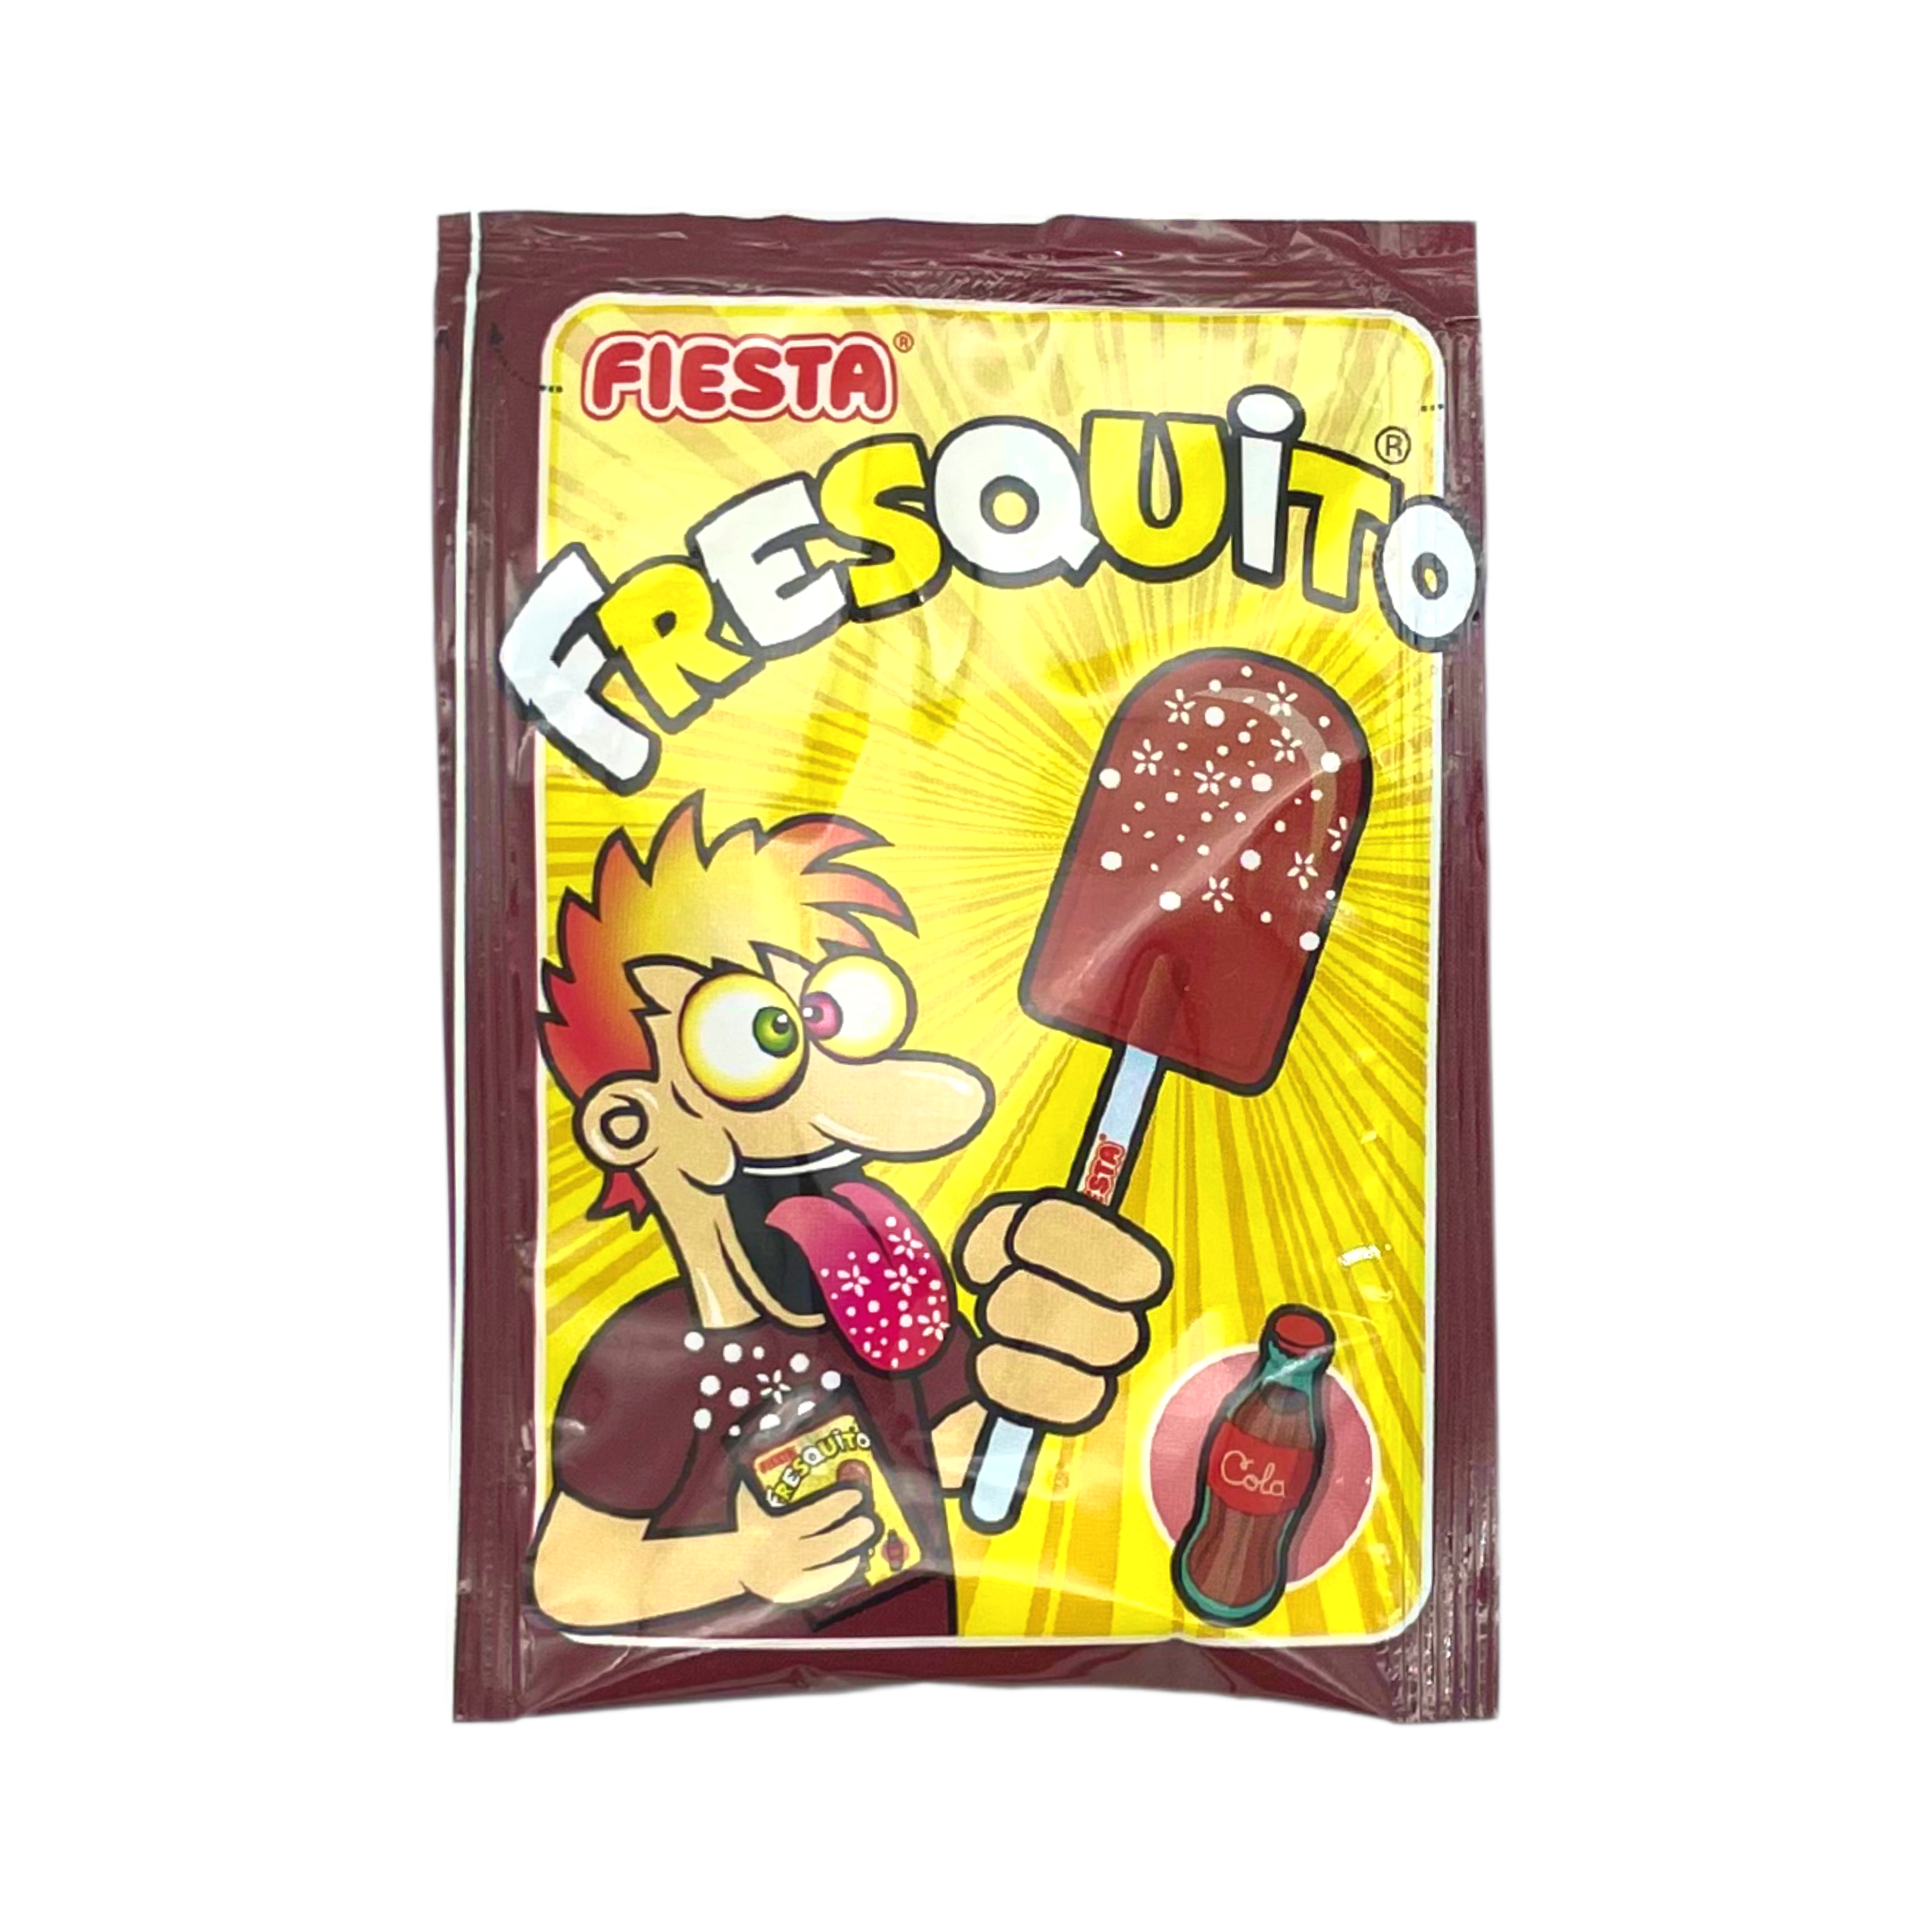 Fiesta - Fresquito gusto Cola 17g